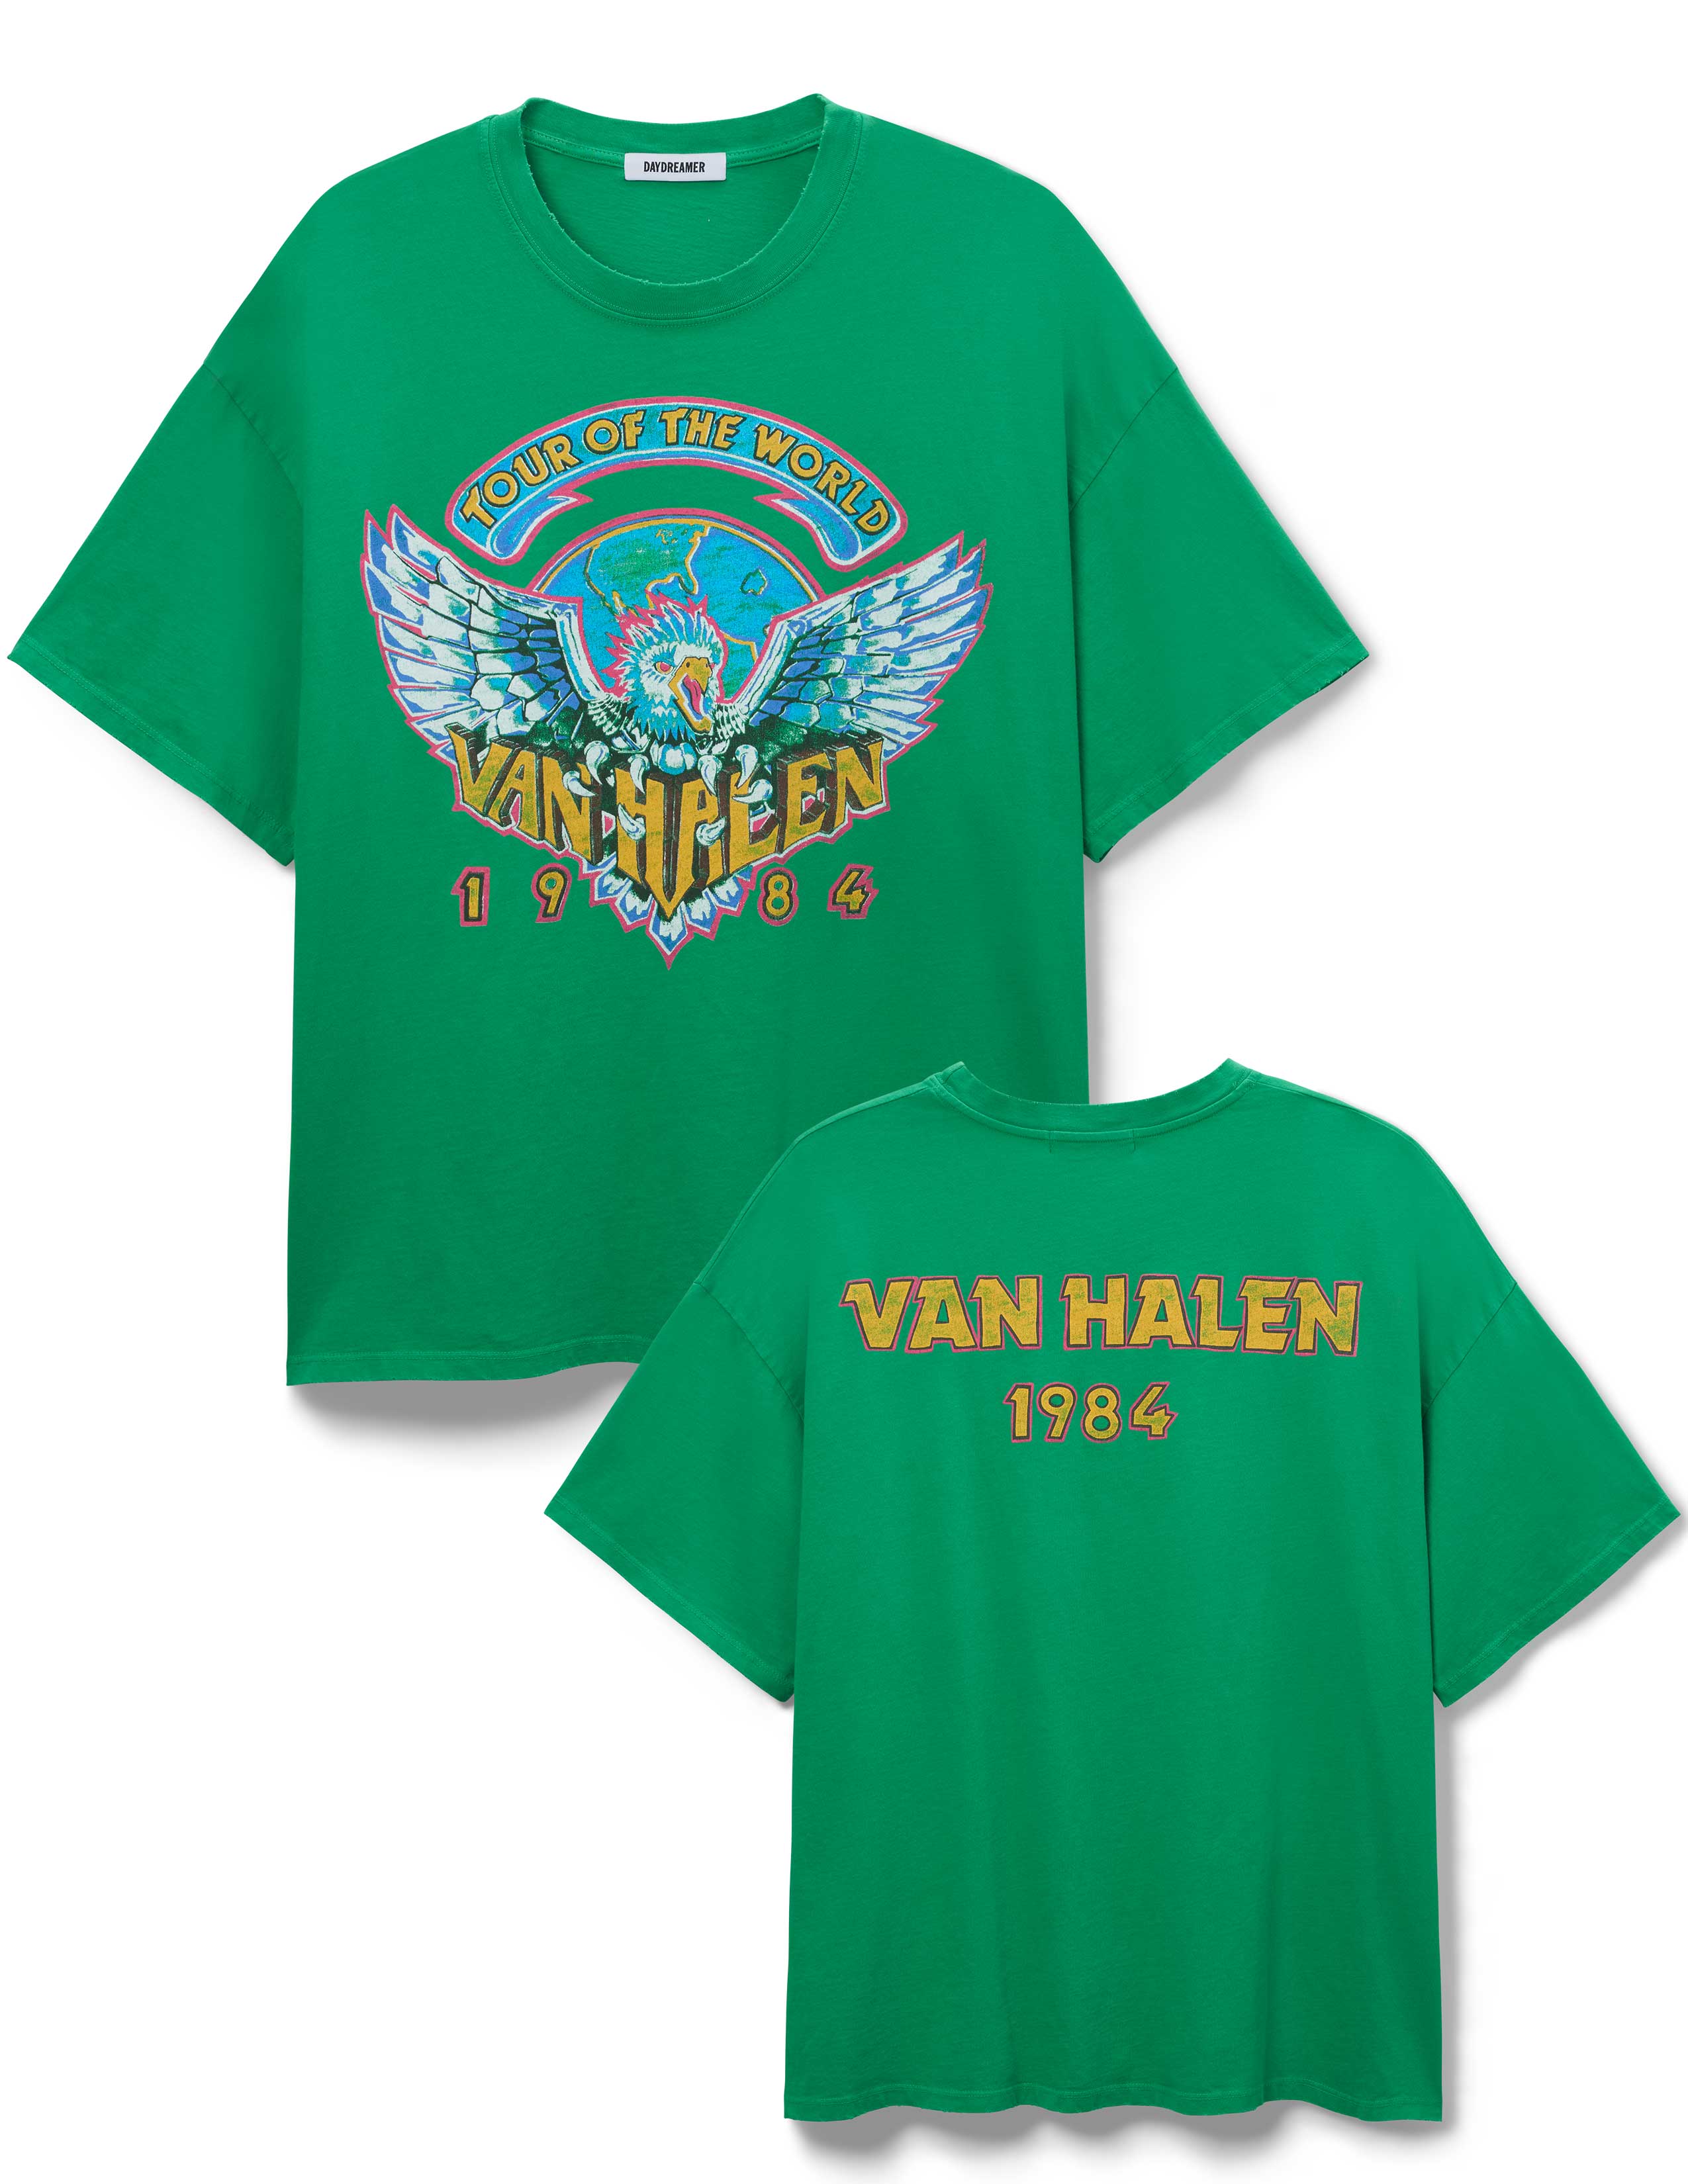 Van Halen Tour of the World OS Tee